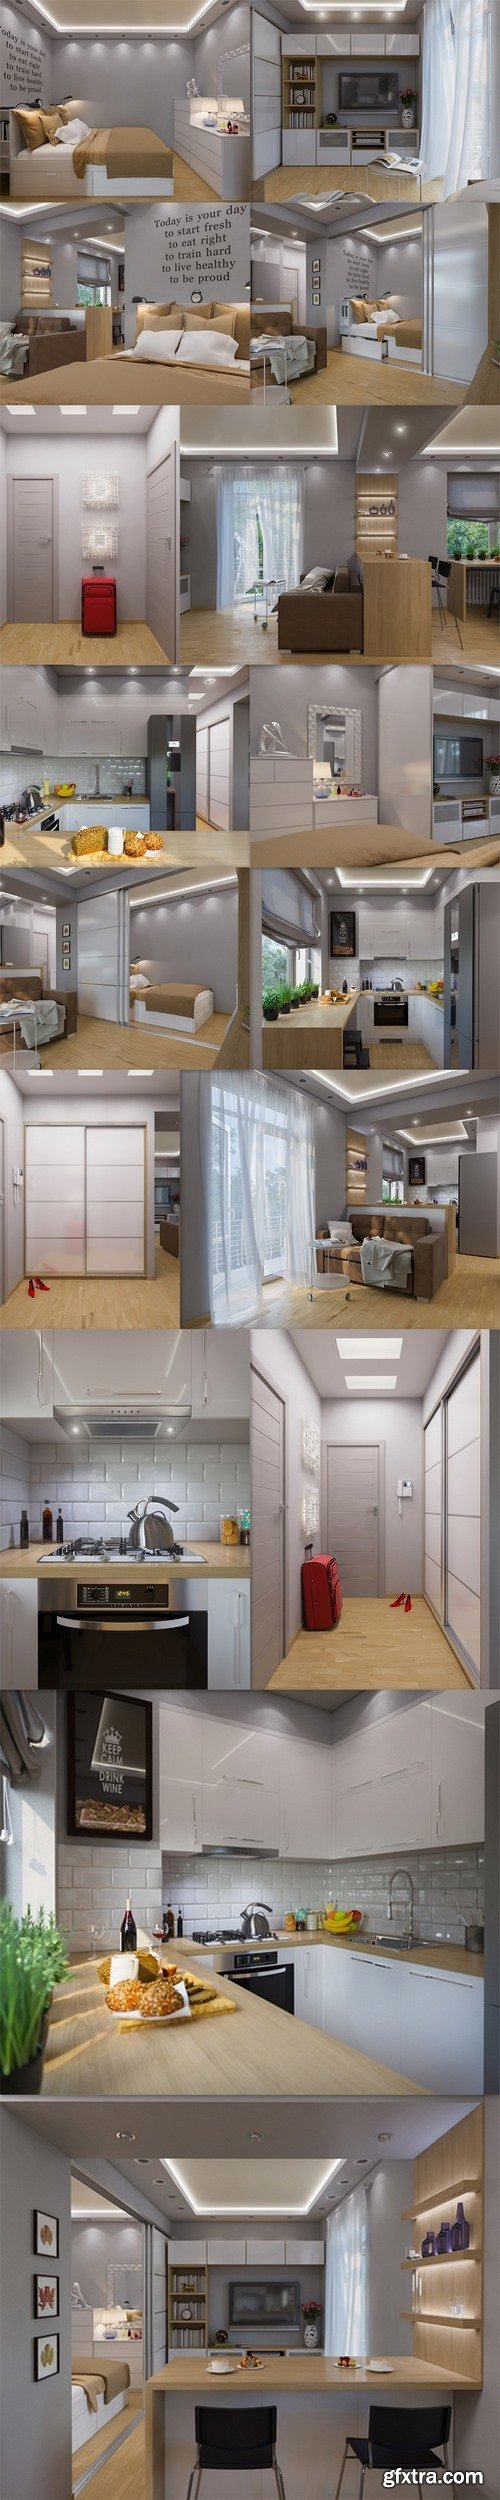 3D rendering living room and bedroom interior design 2